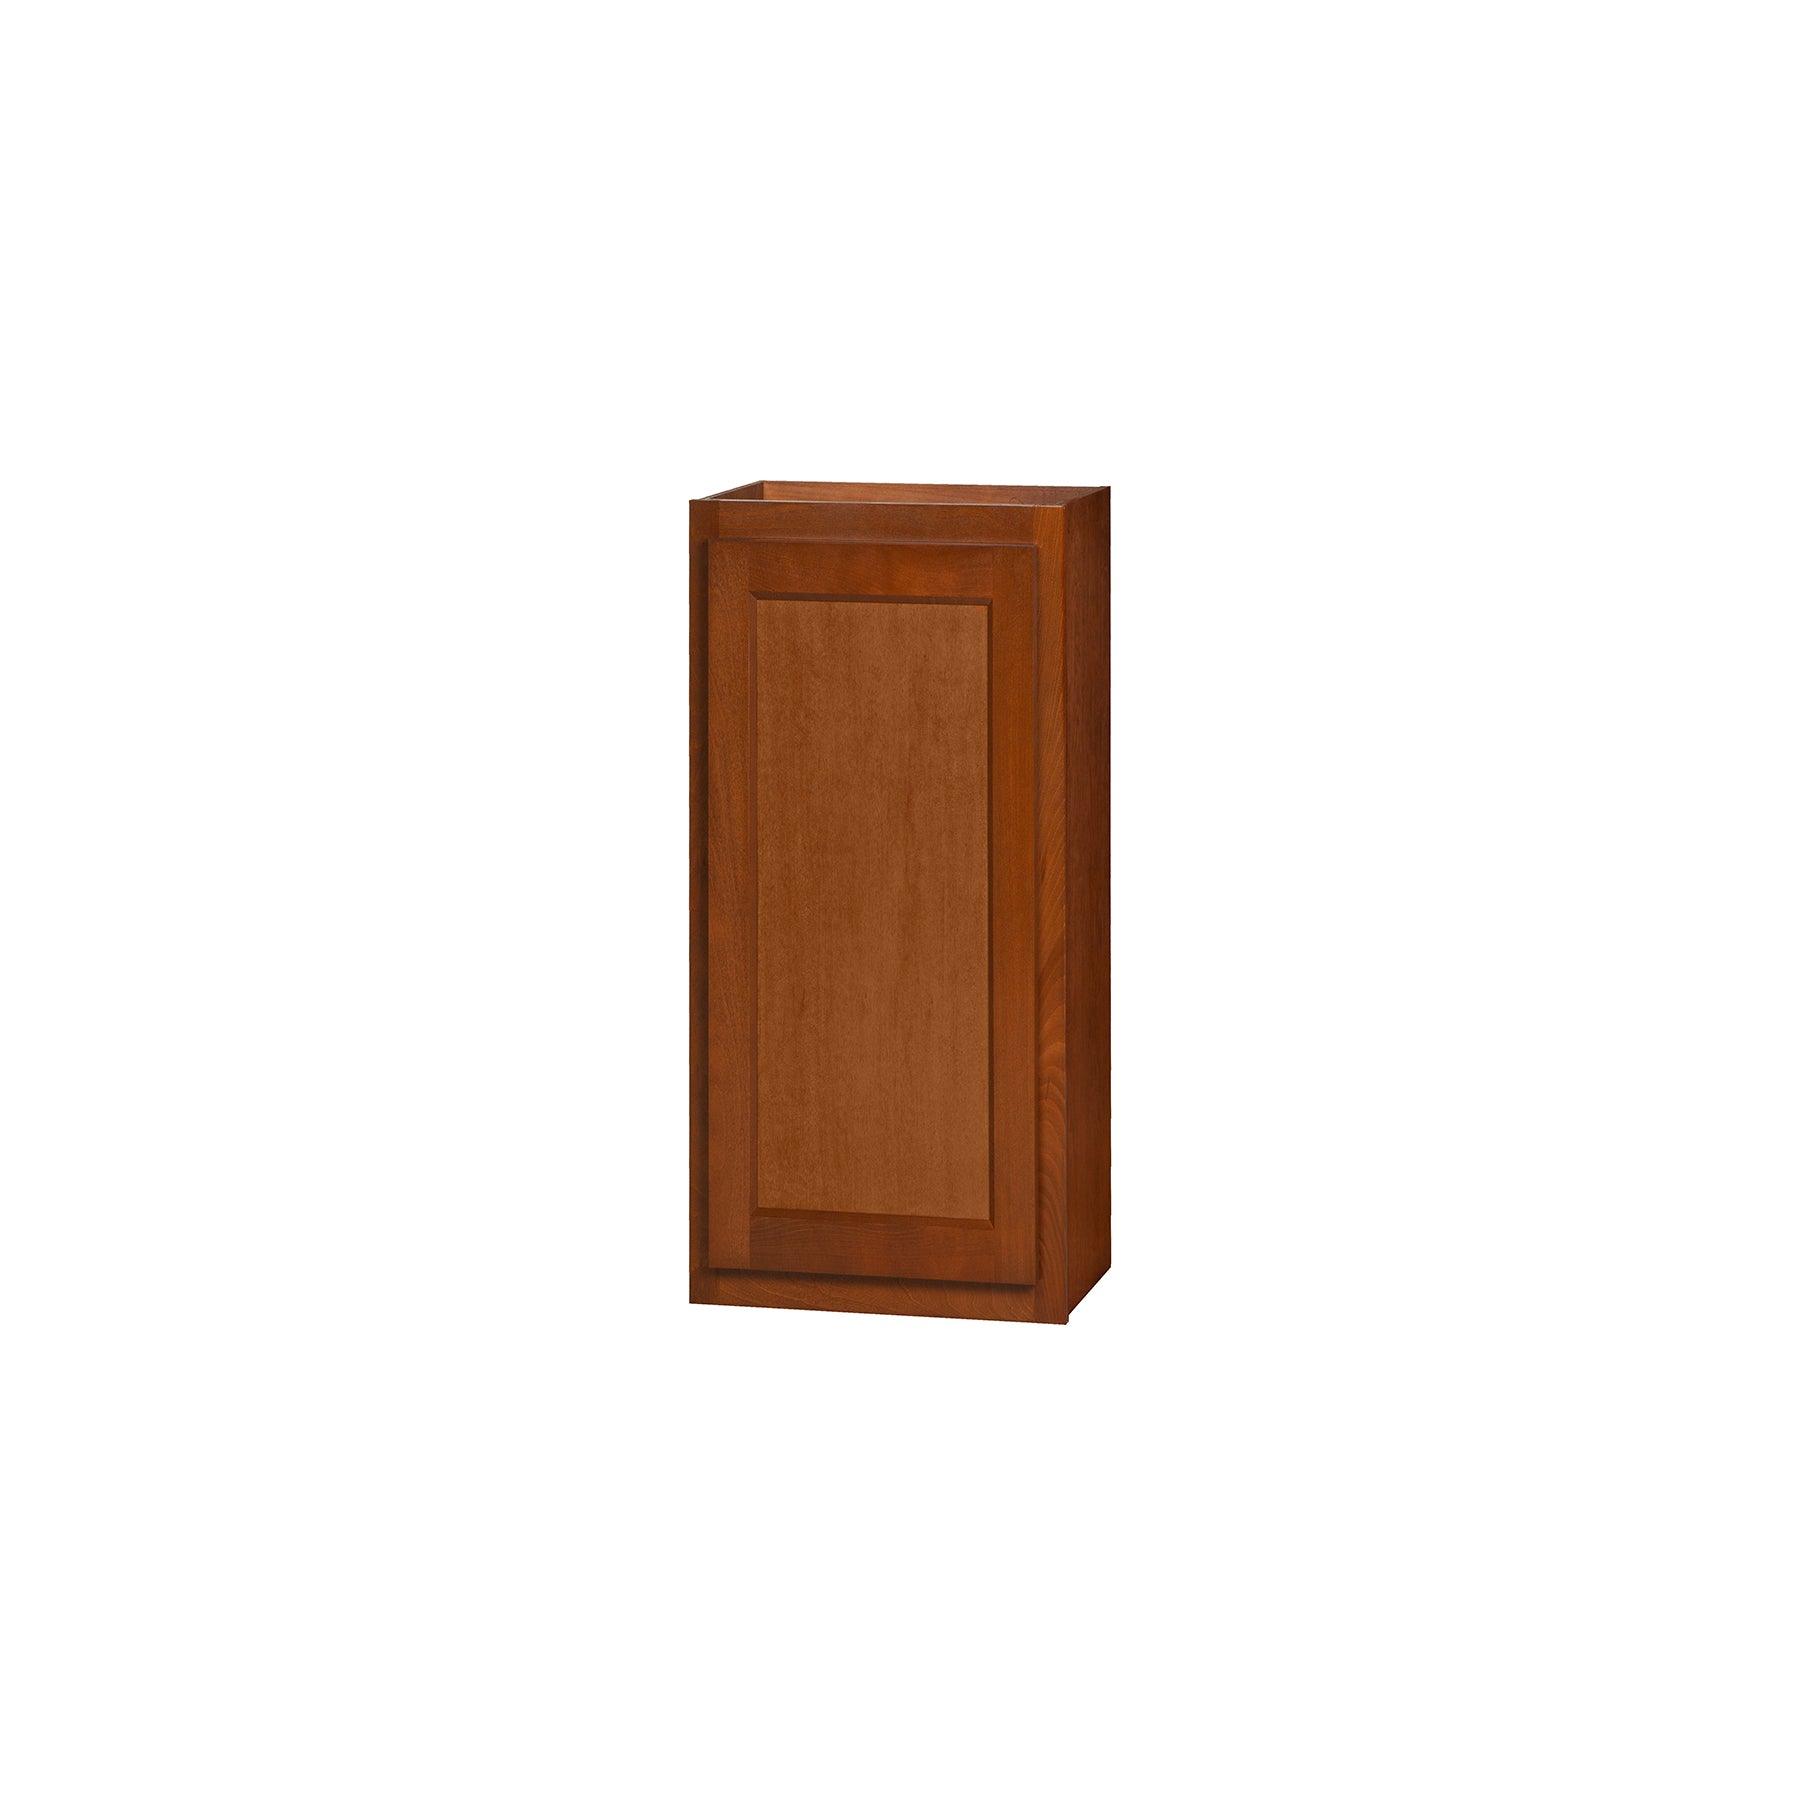 30 inch Wall Cabinets - Single Door - Glenwood Shaker - 15 Inch W x 30 Inch H x 12 Inch D